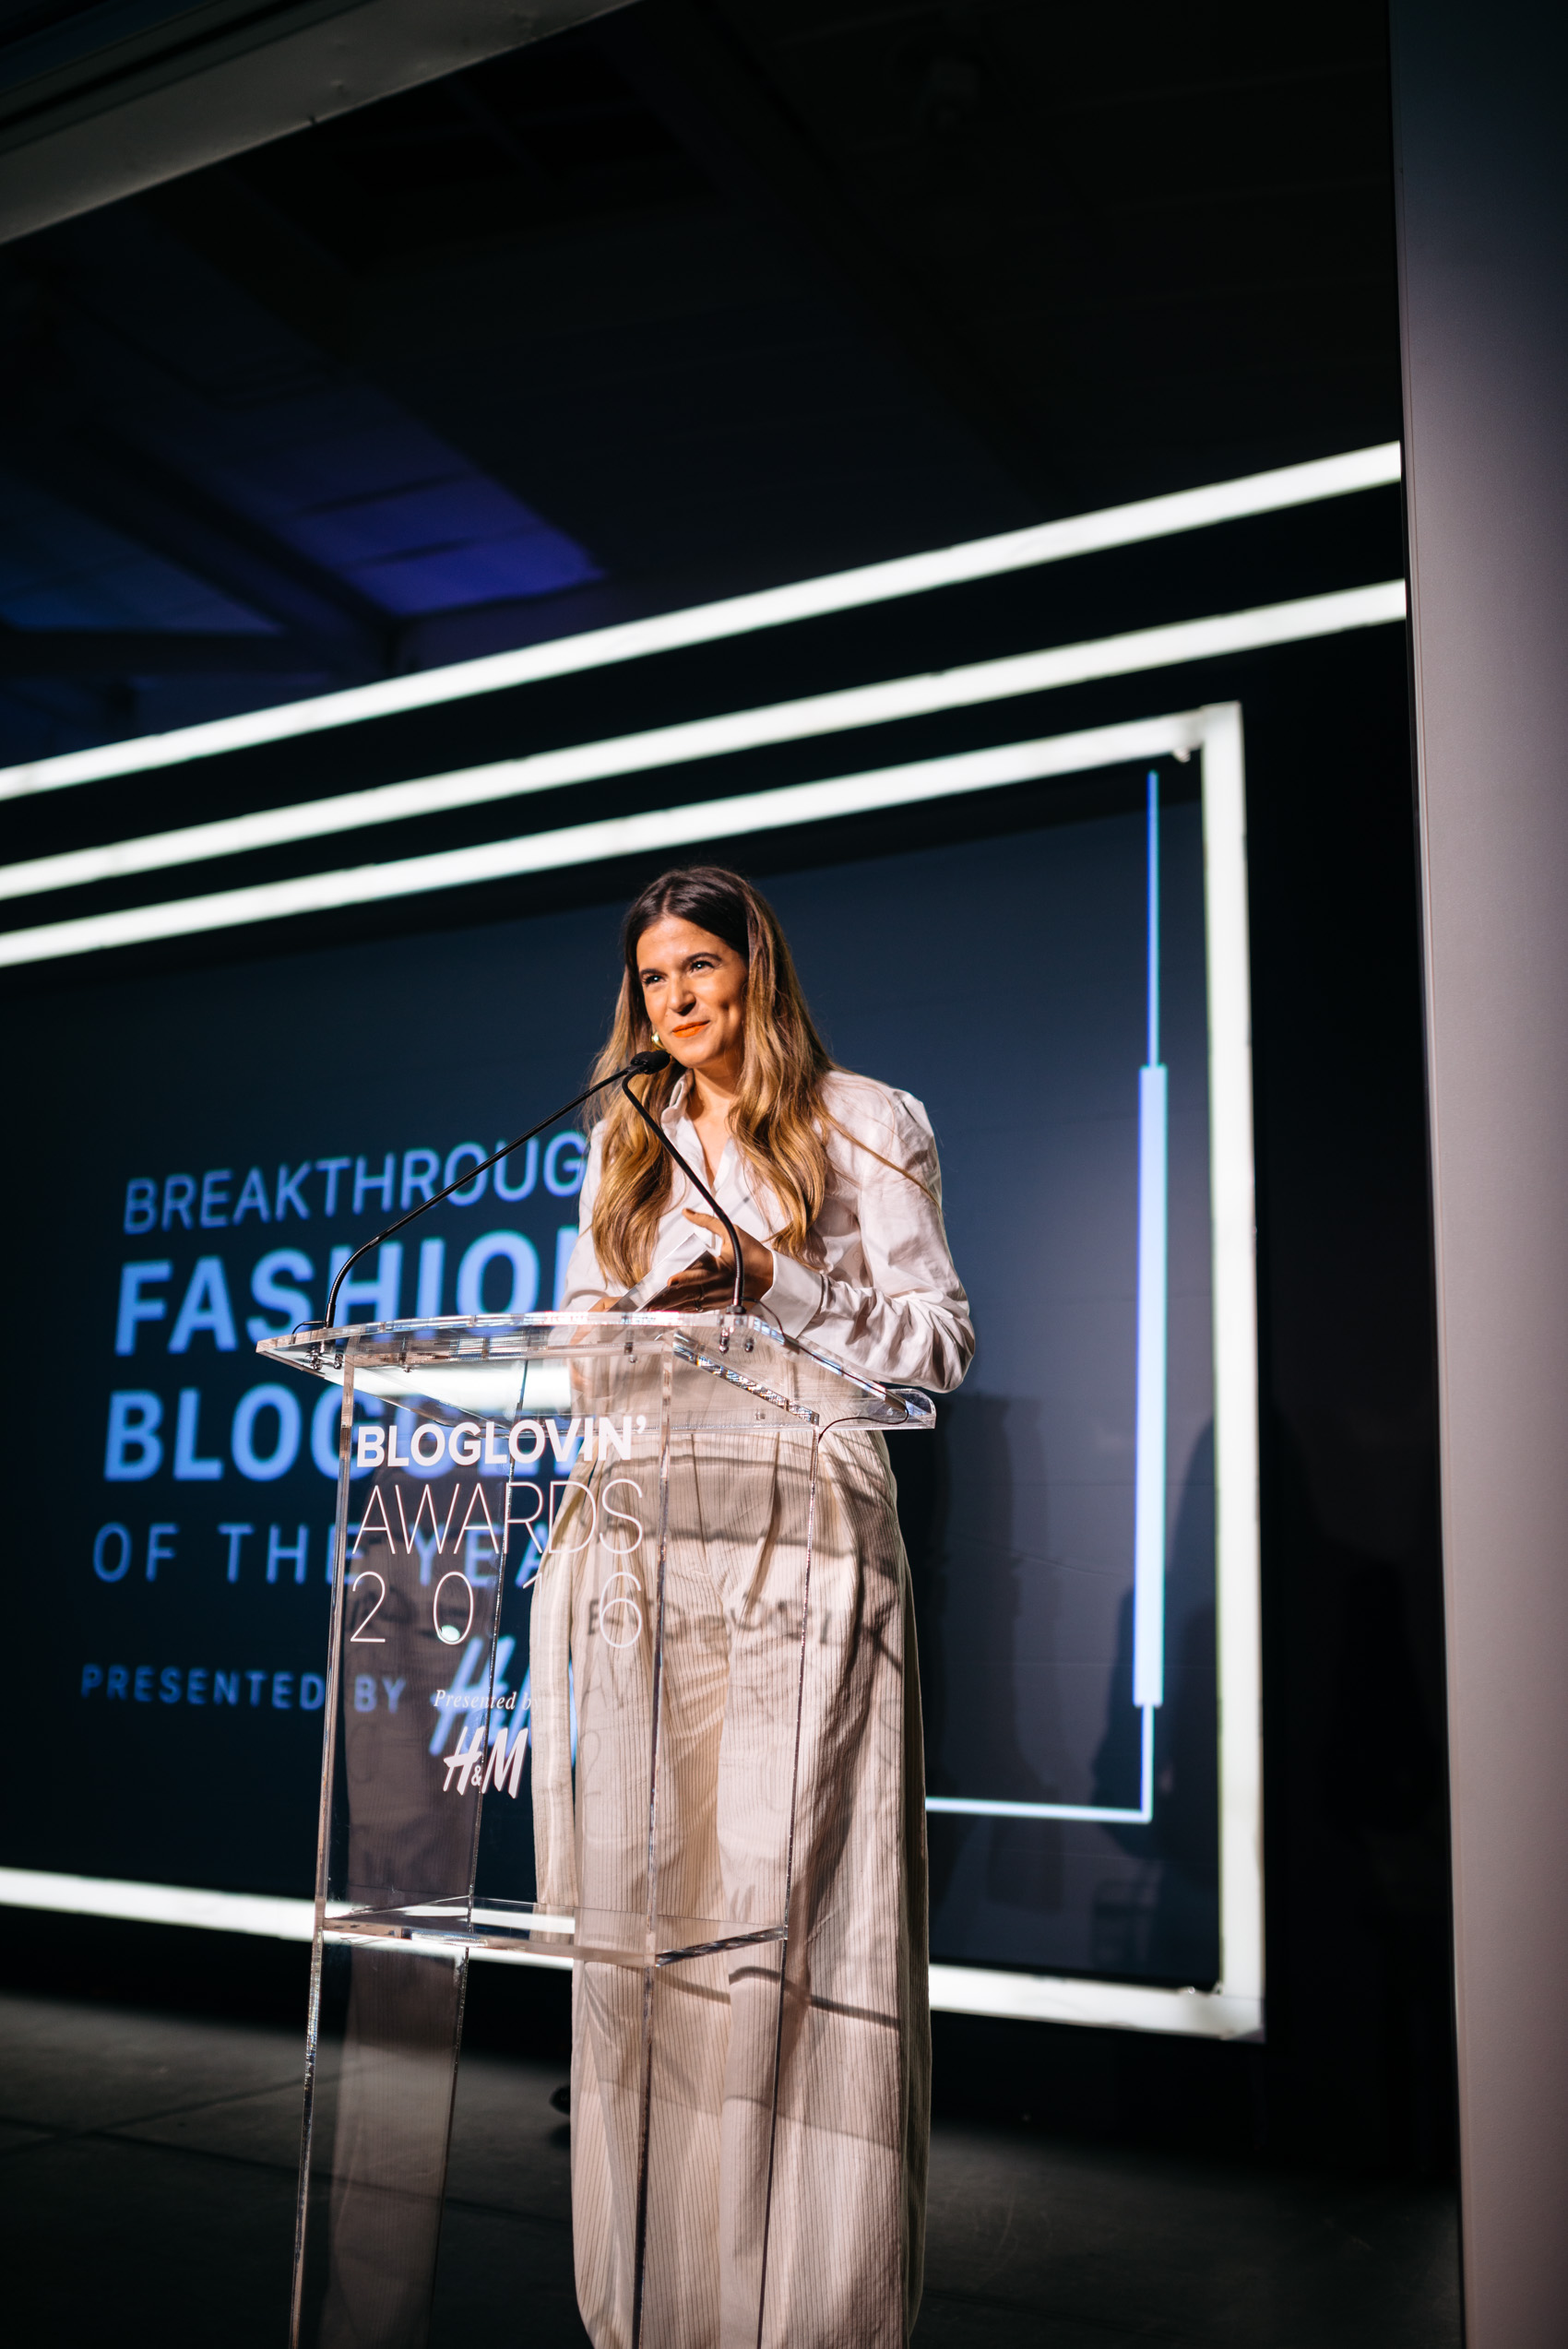 Maristella accepting her Bloglovin Award wearing H&M Studio AW16